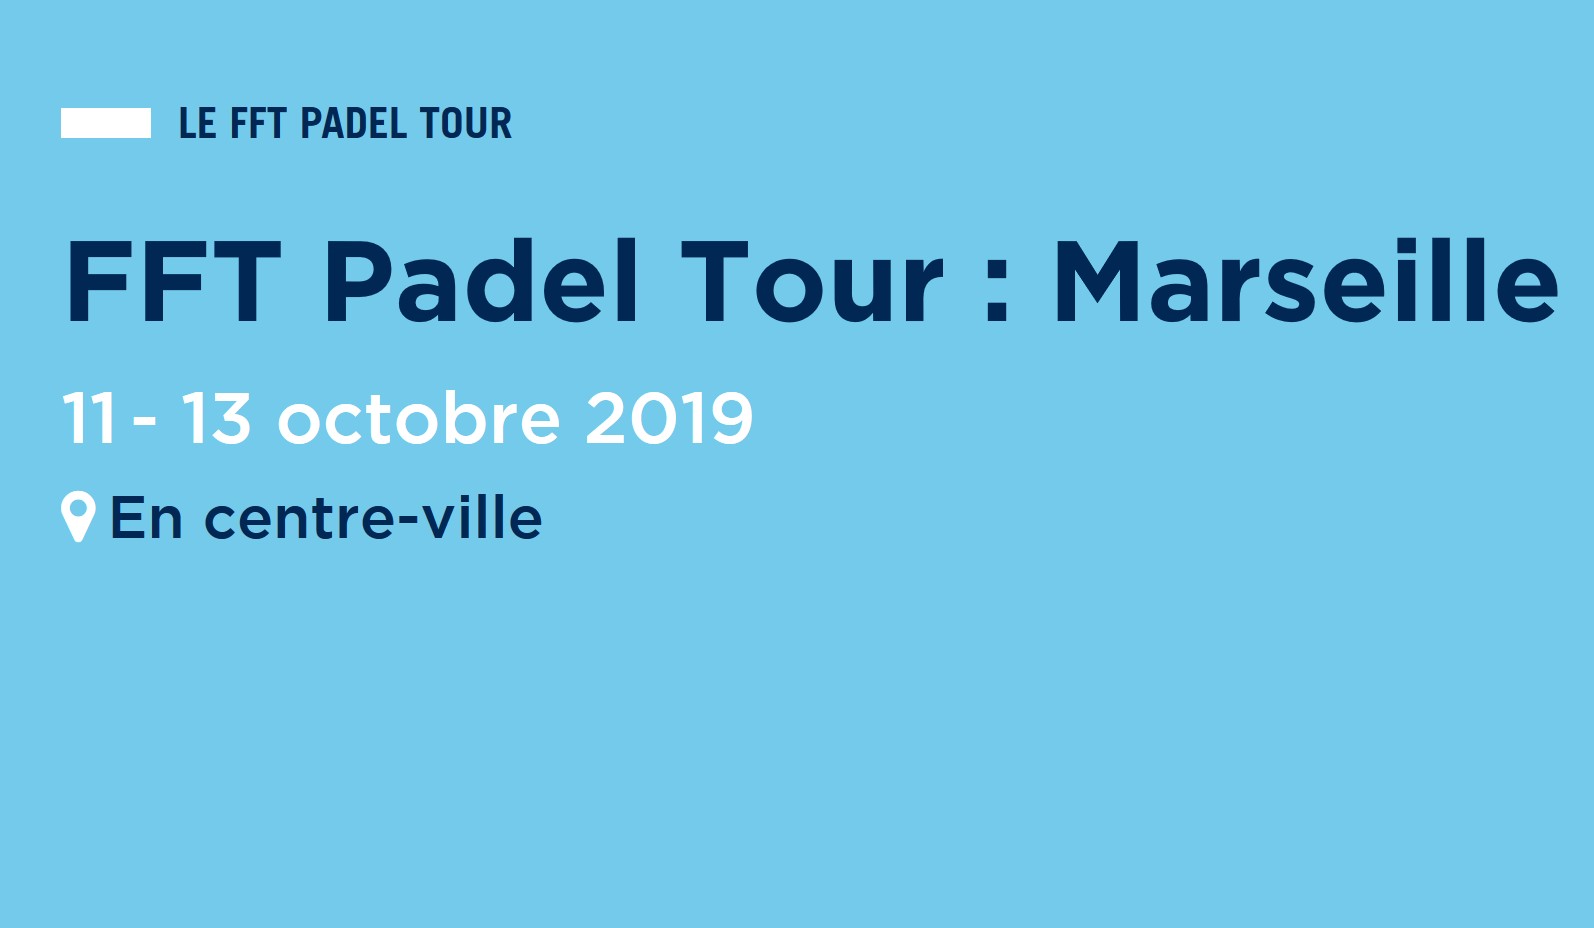 FFT Padel Tour Marselha – Datas